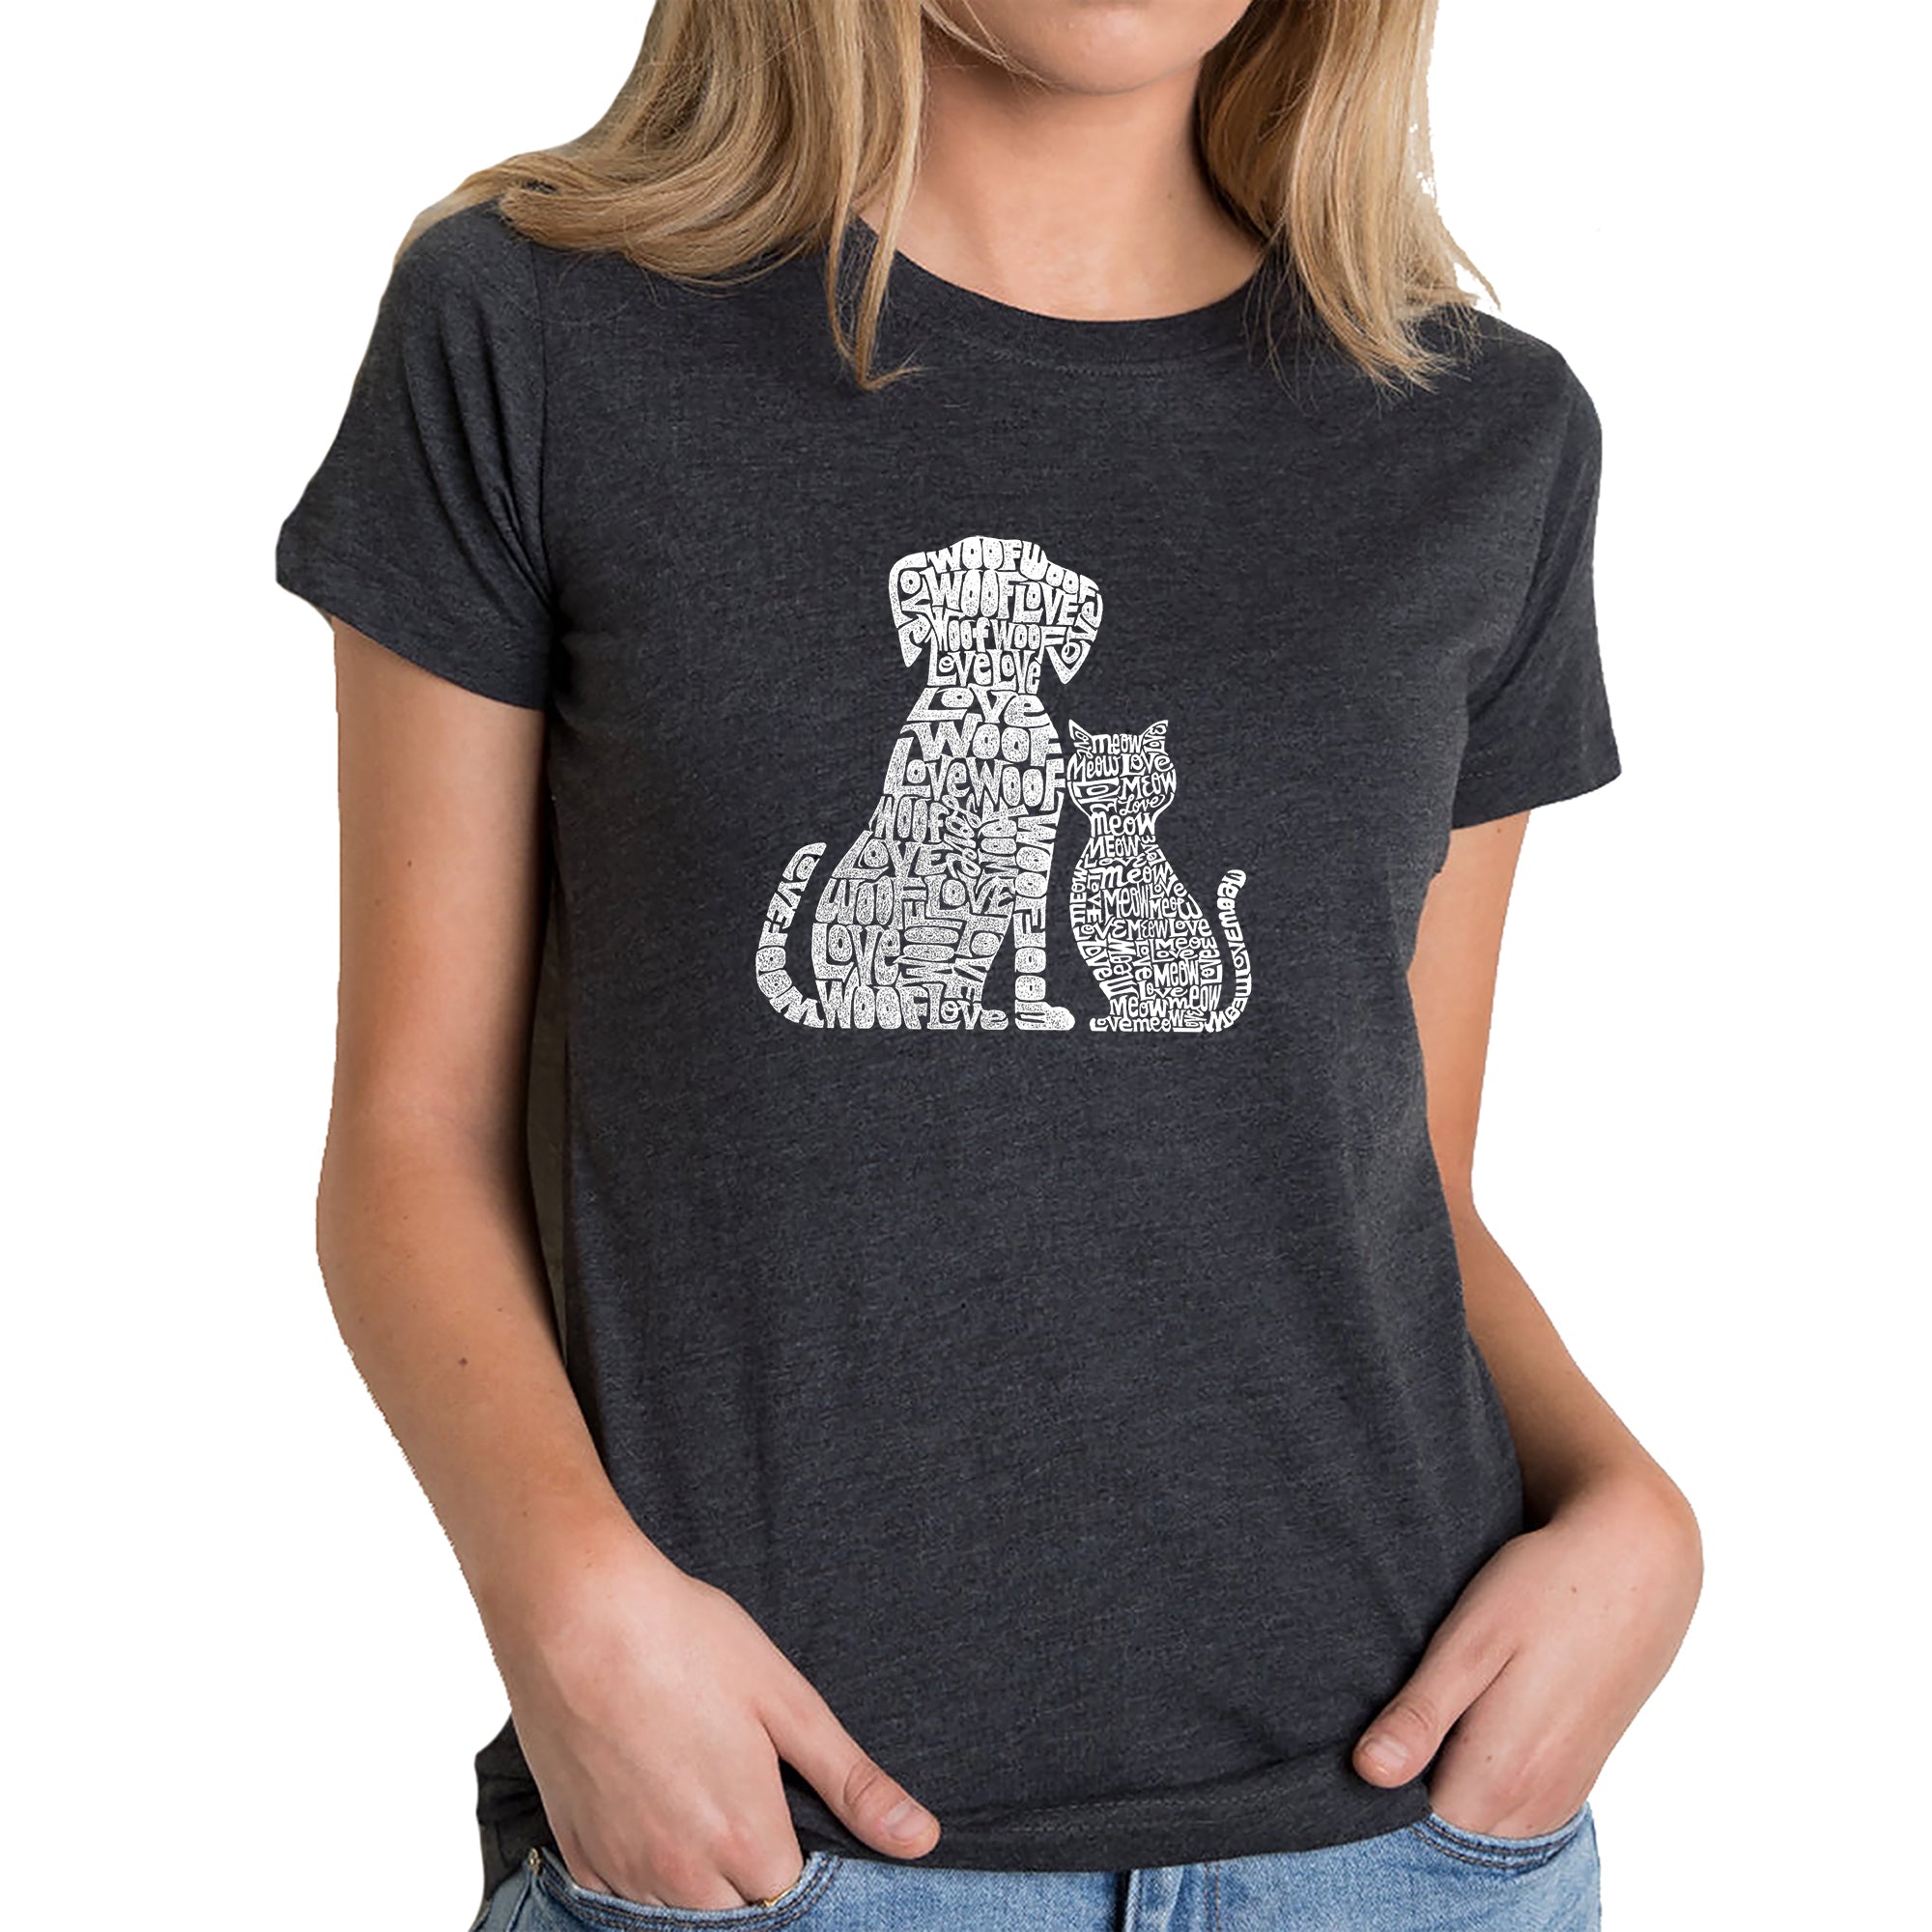 Dogs And Cats - Women's Premium Blend Word Art T-Shirt - Black - Medium